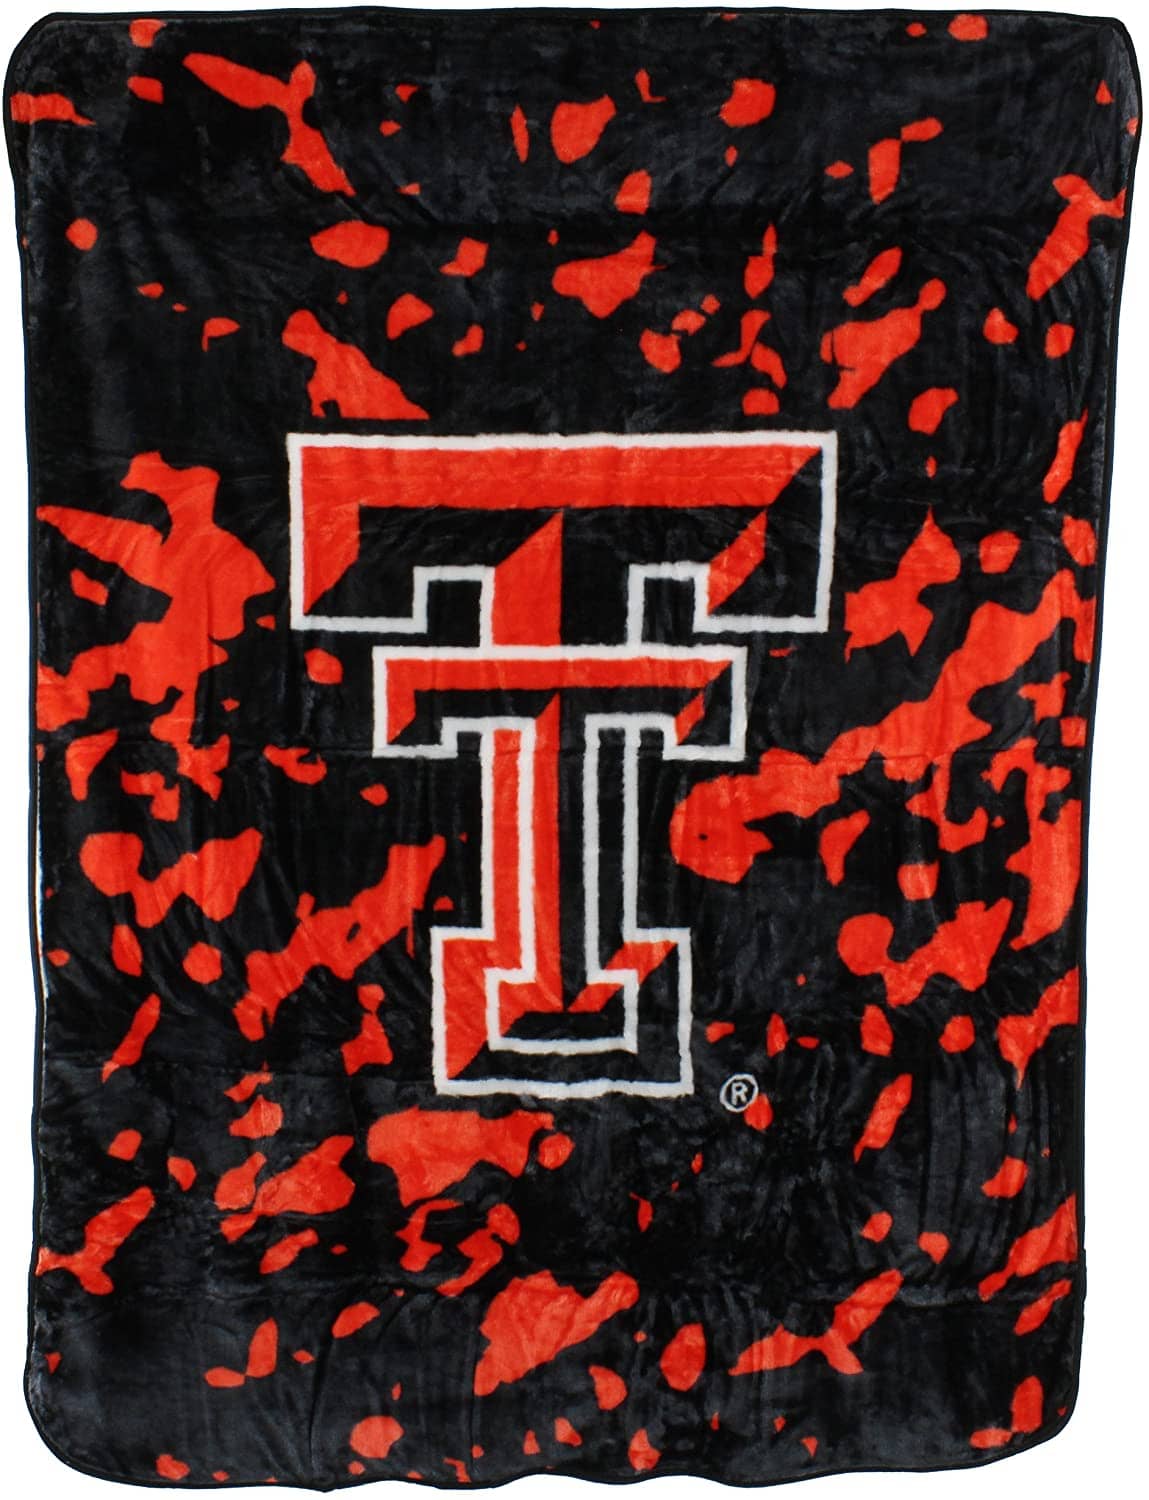 Ncaa Throw Blanket Texas Tech Red Raiders Fleece Blanket